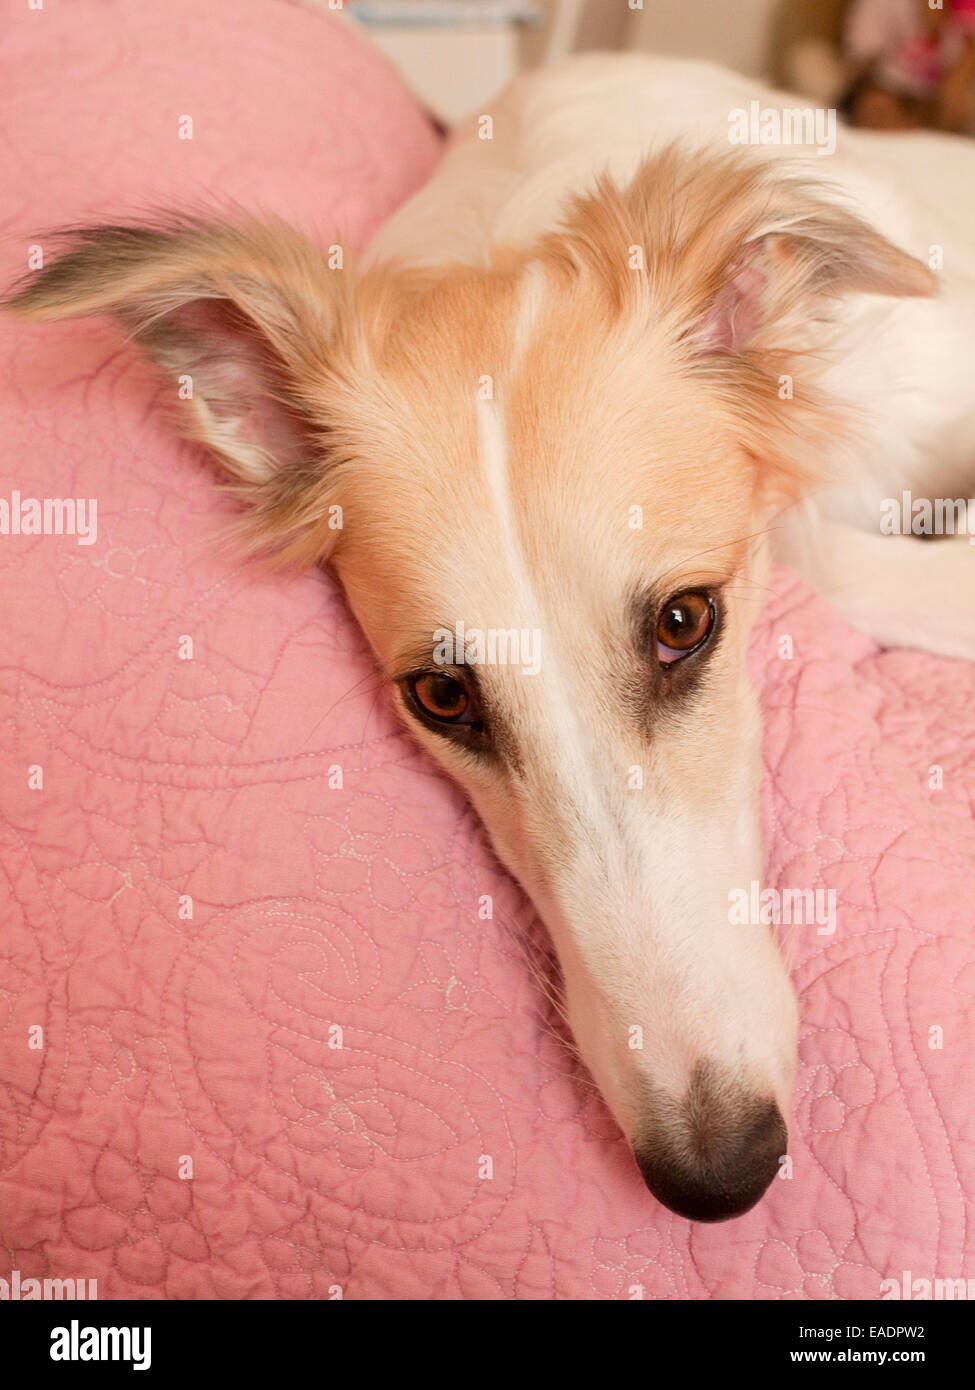 Hund Kopf auf Bett ruhen Stockfoto